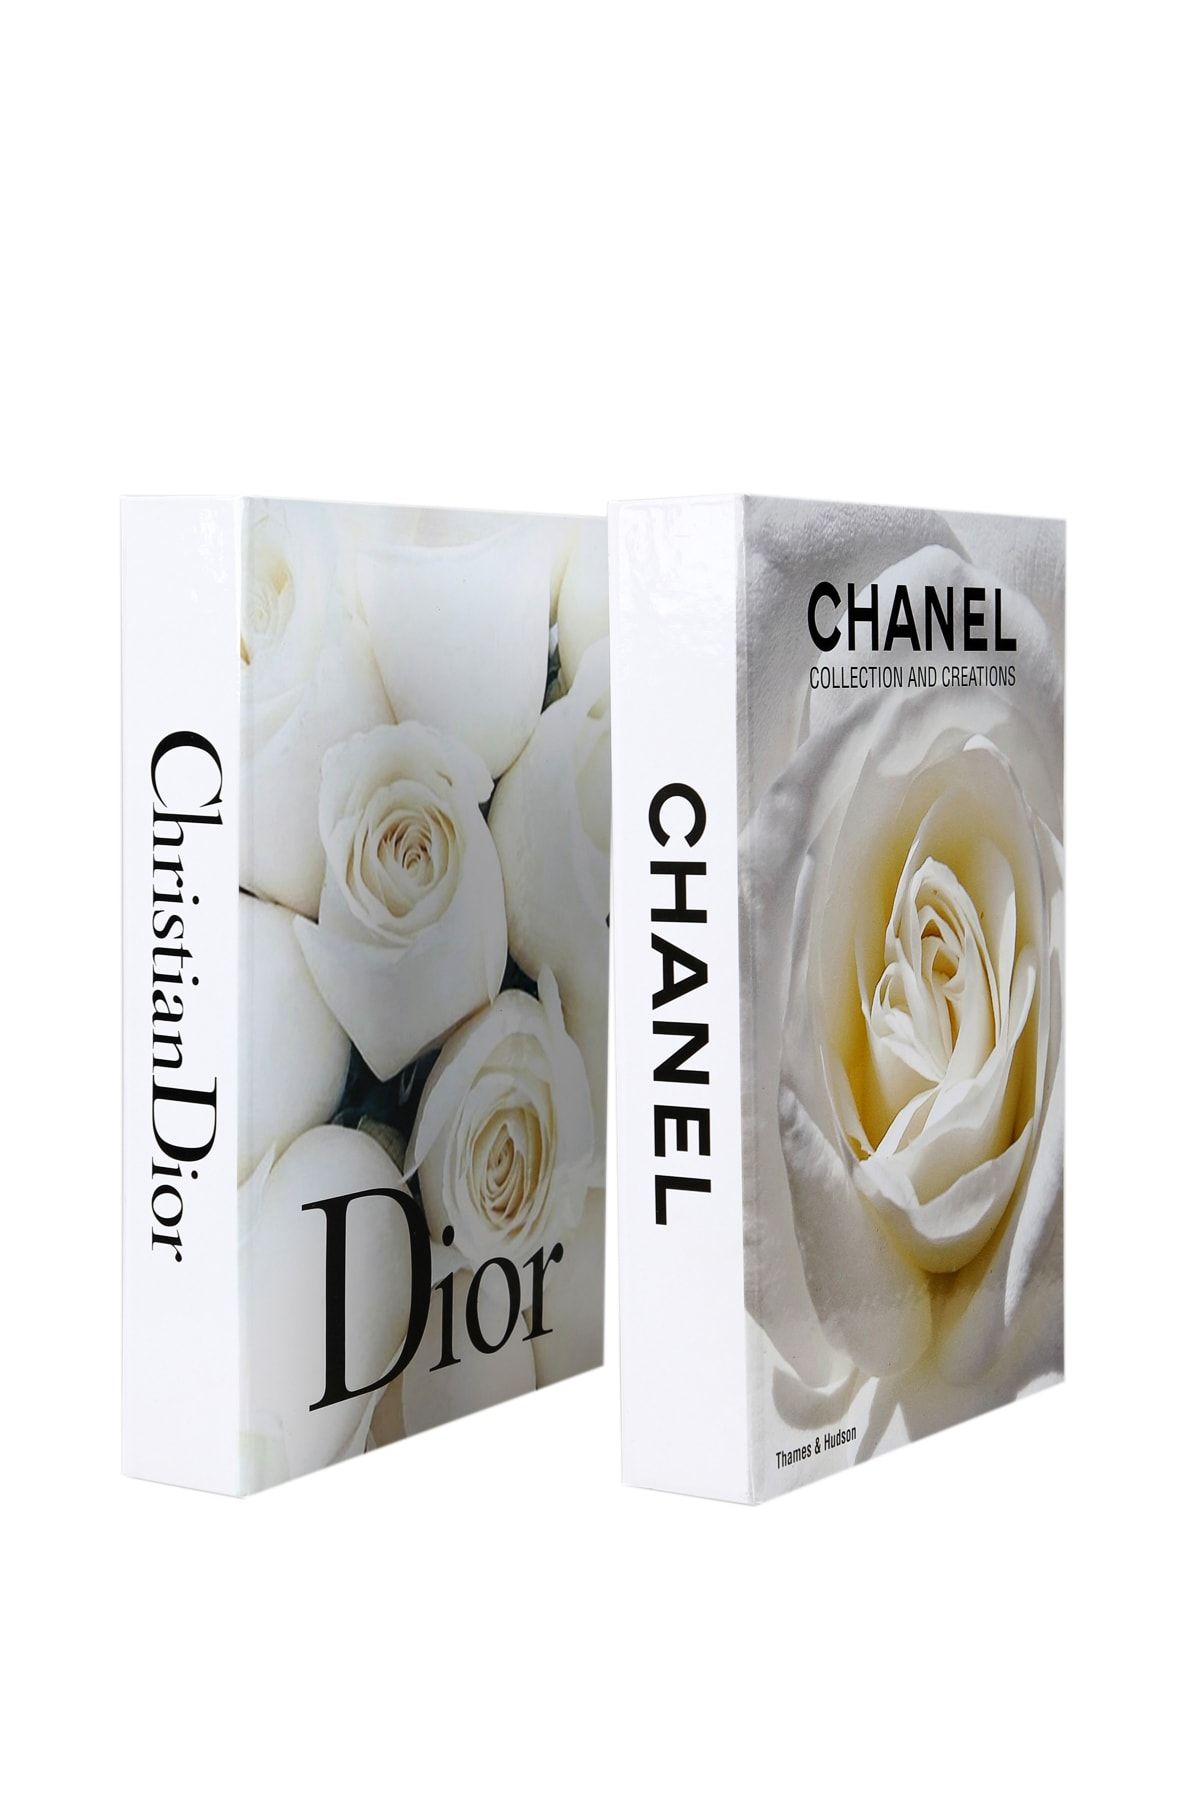 irayhomedecor 2'li Chanel Beyaz Gül/Dior Beyaz Gül Dekoratif Kitap Kutu